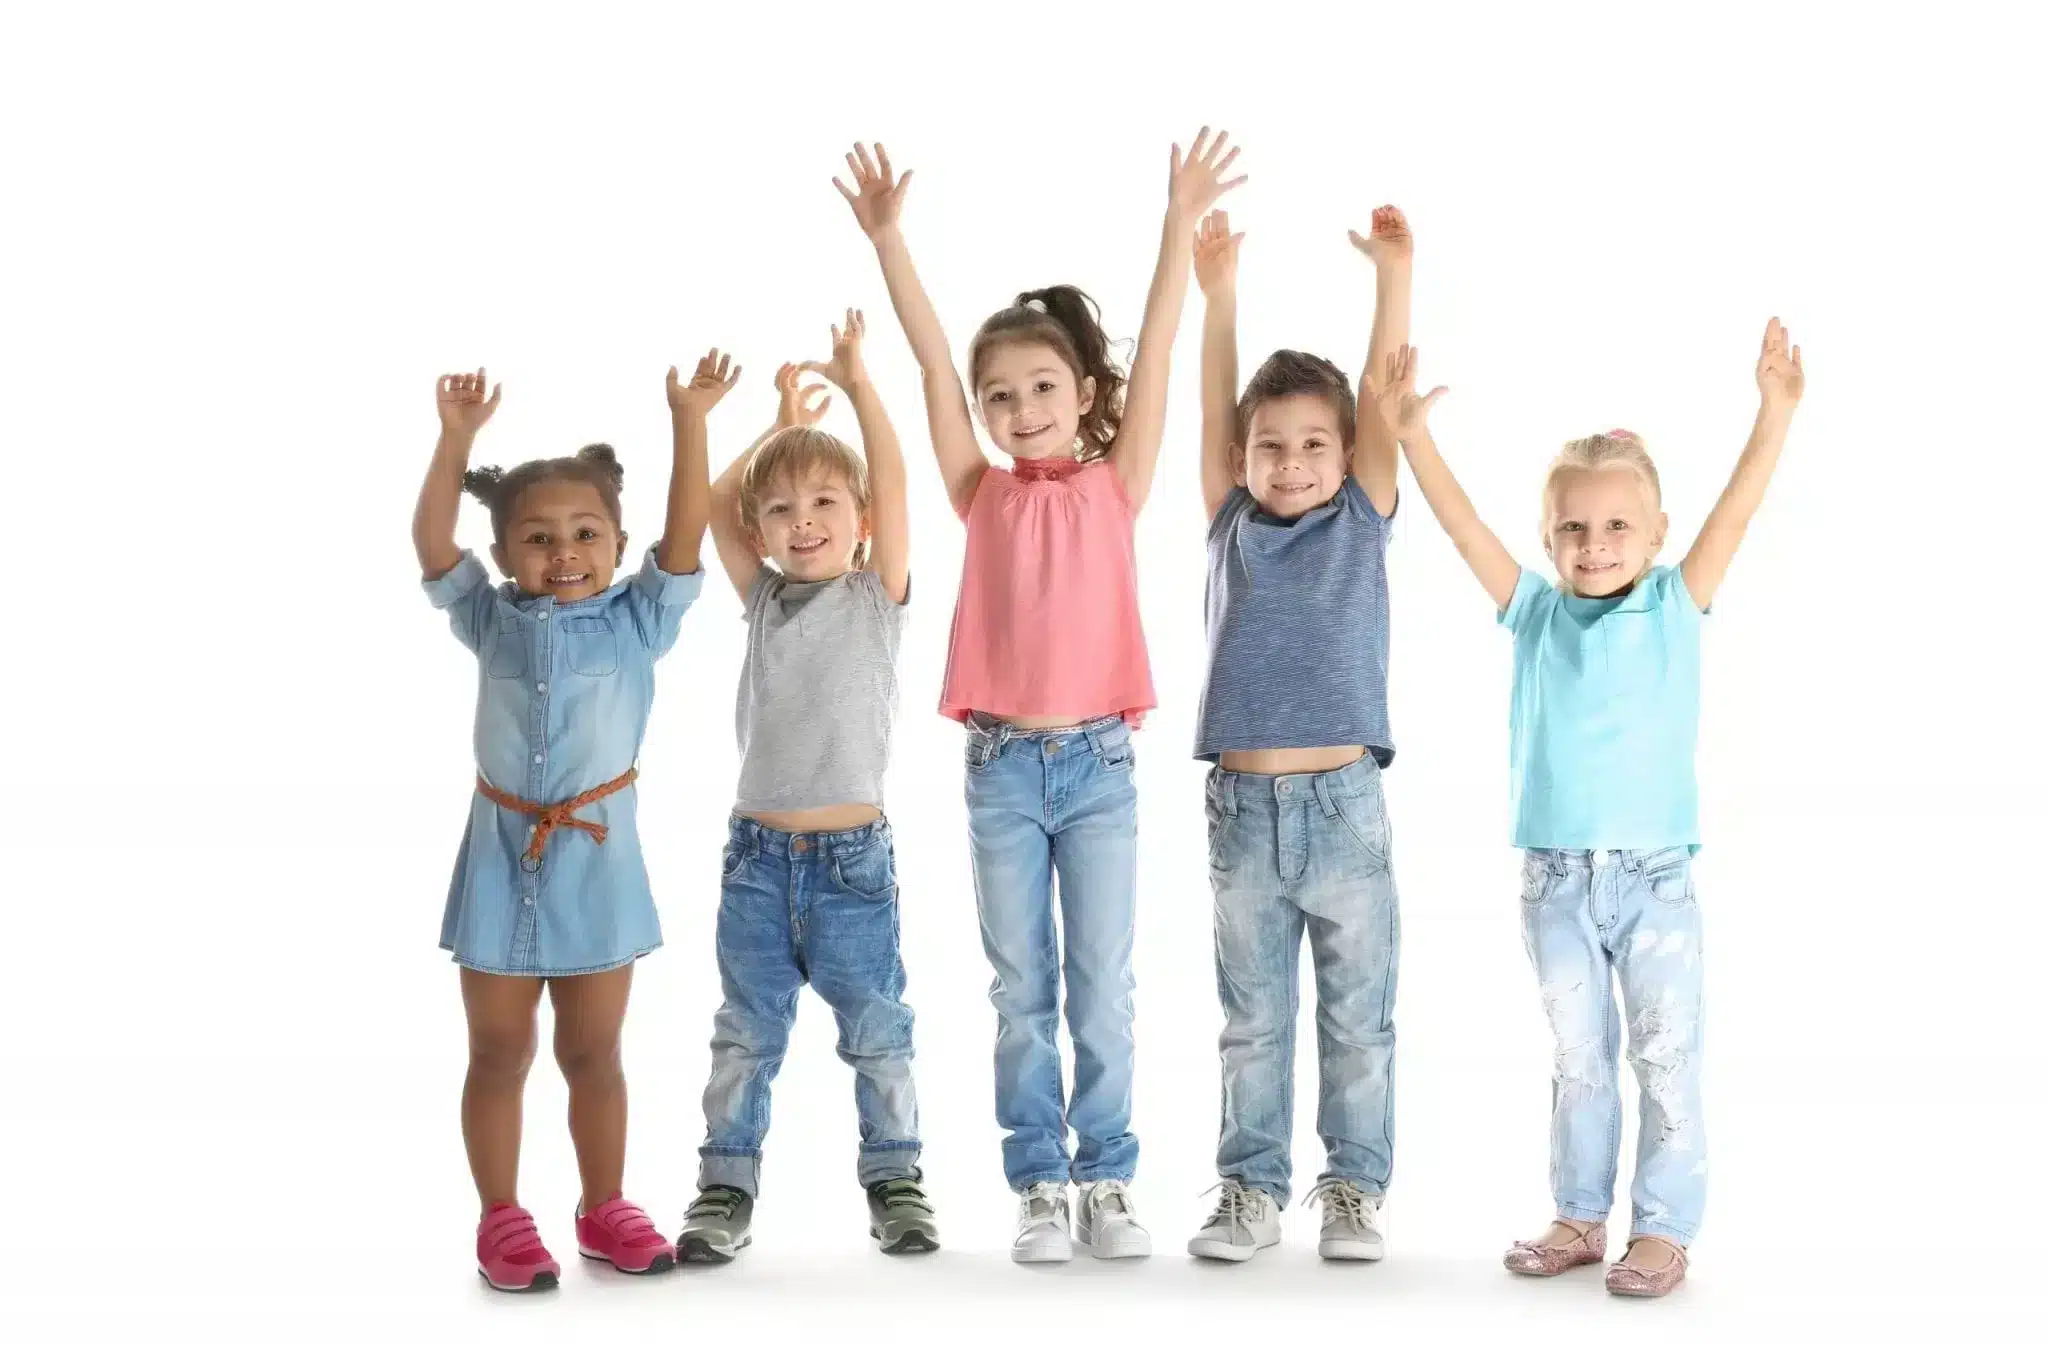 Happy 5 kids raising their hands happily